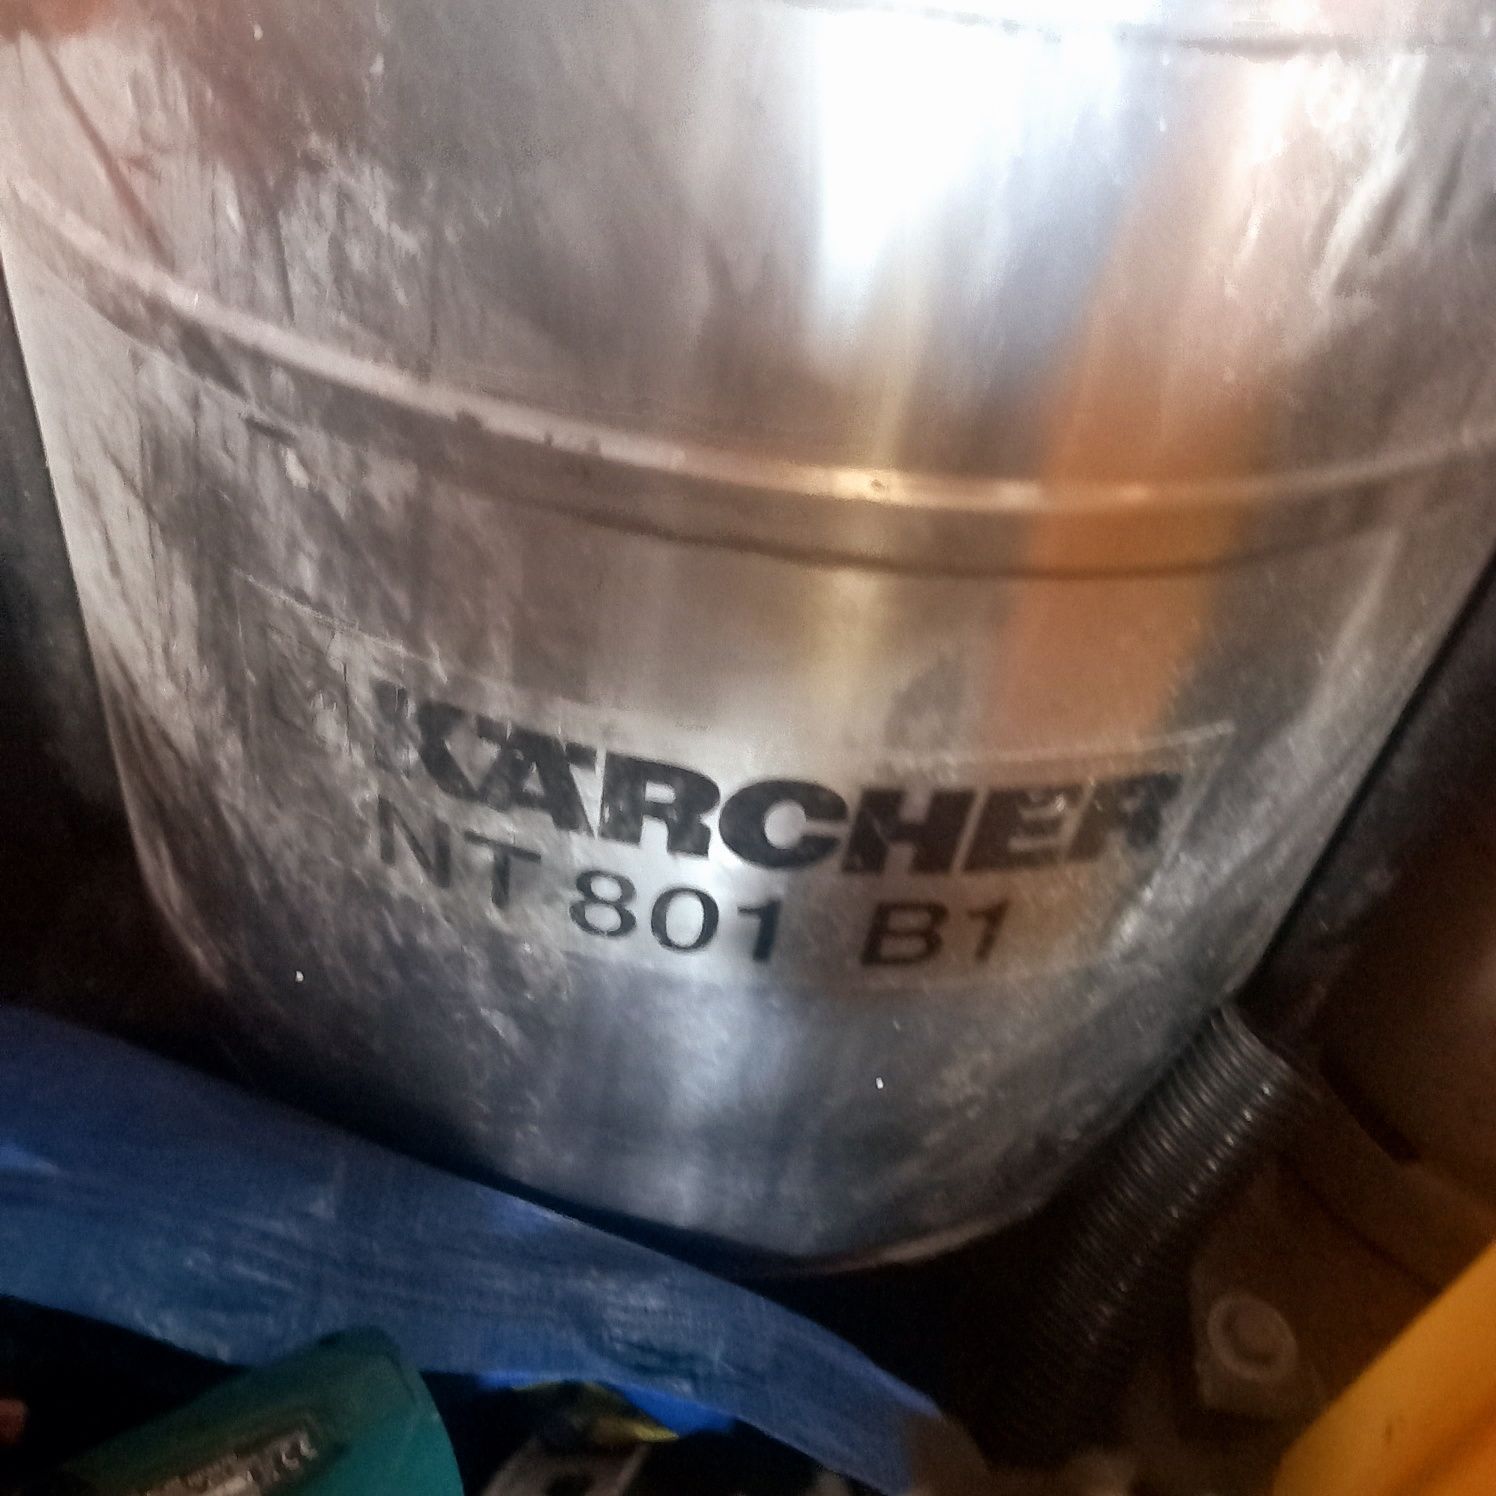 Aspirator Karcher NT 801 B1